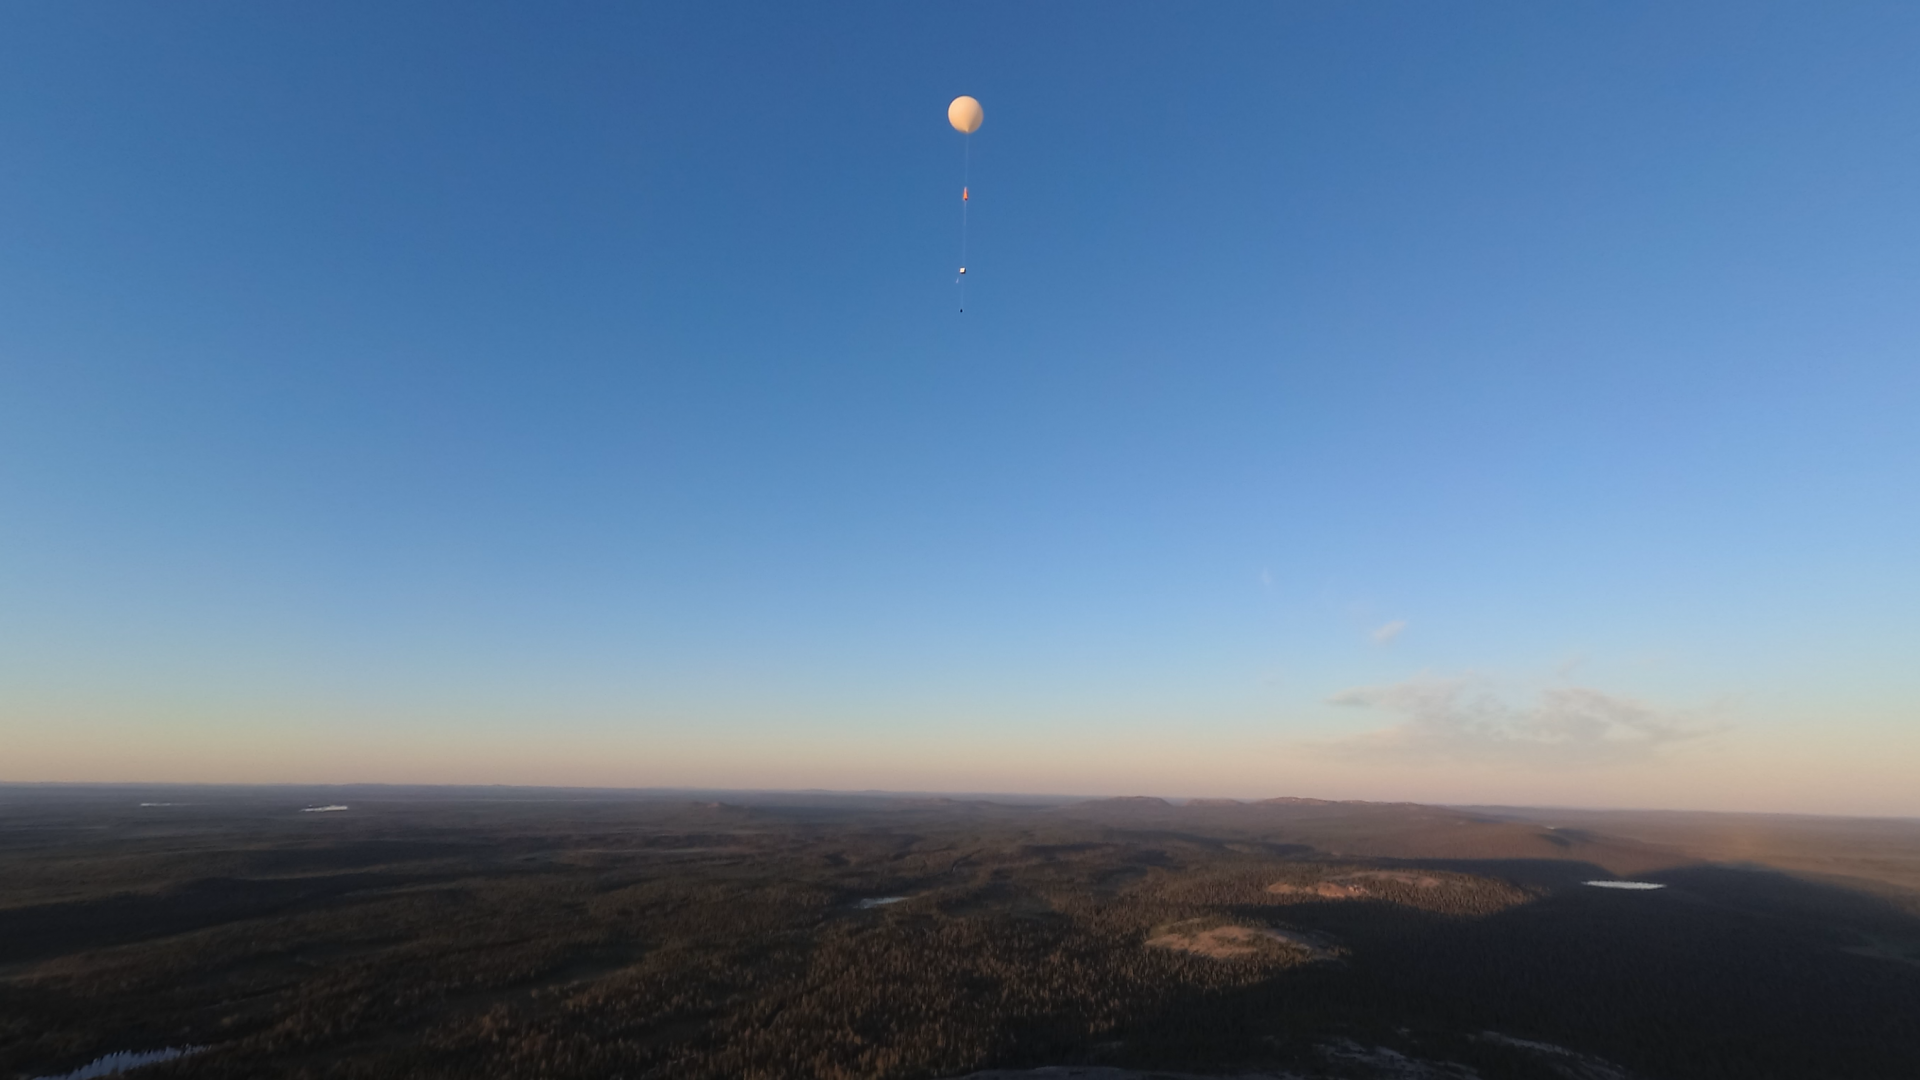 Kitsat raising up to stratosphere